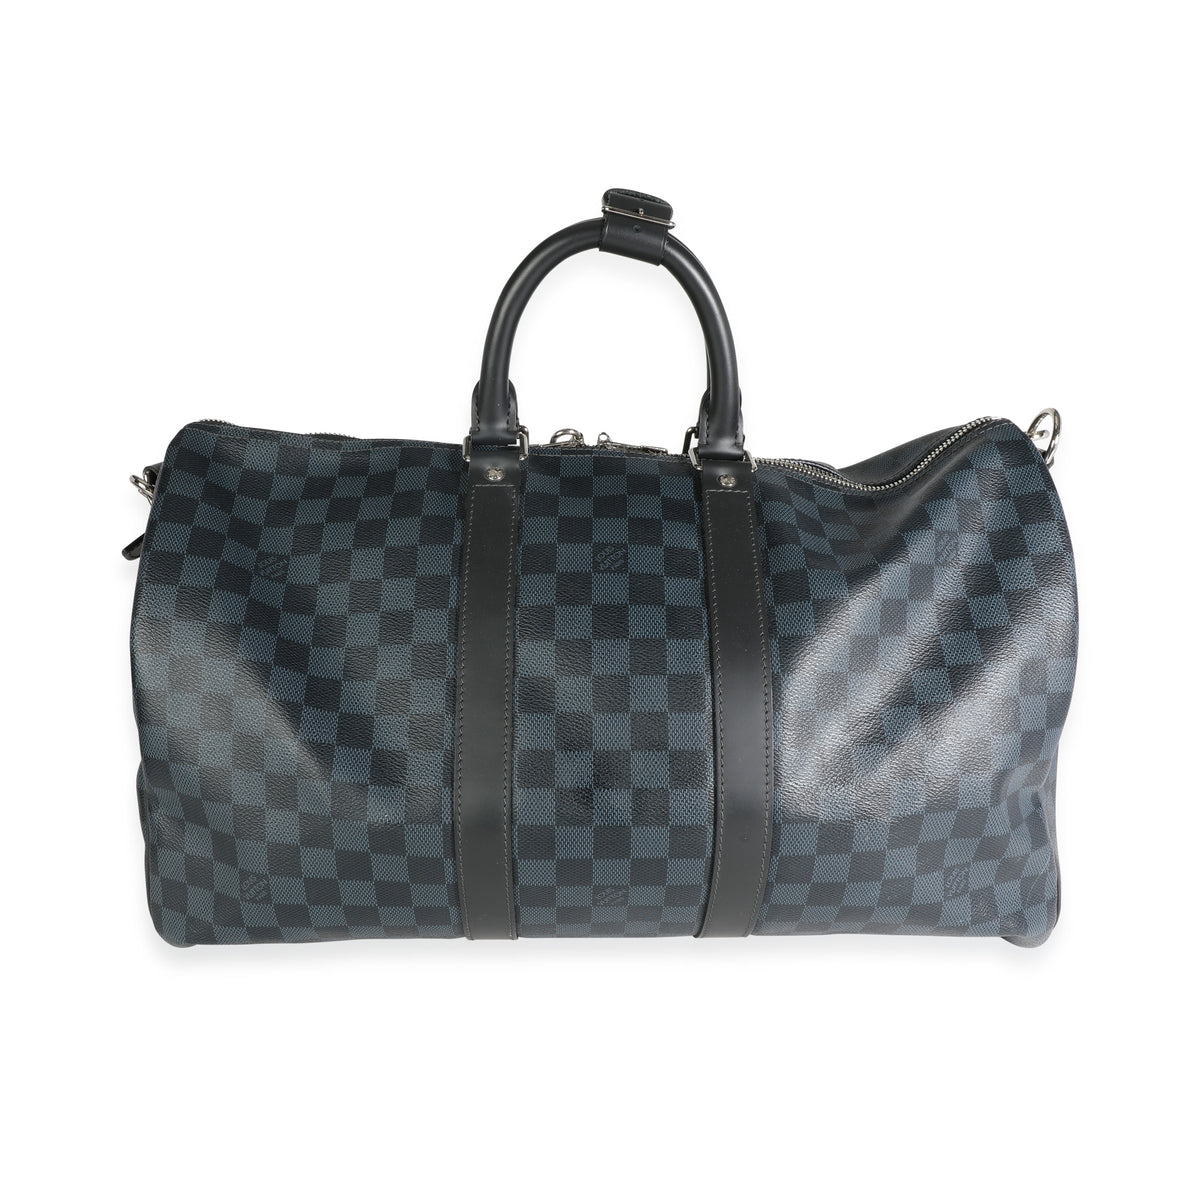 Louis Vuitton Keepall Bag Limited Edition Monogram Cerises 45